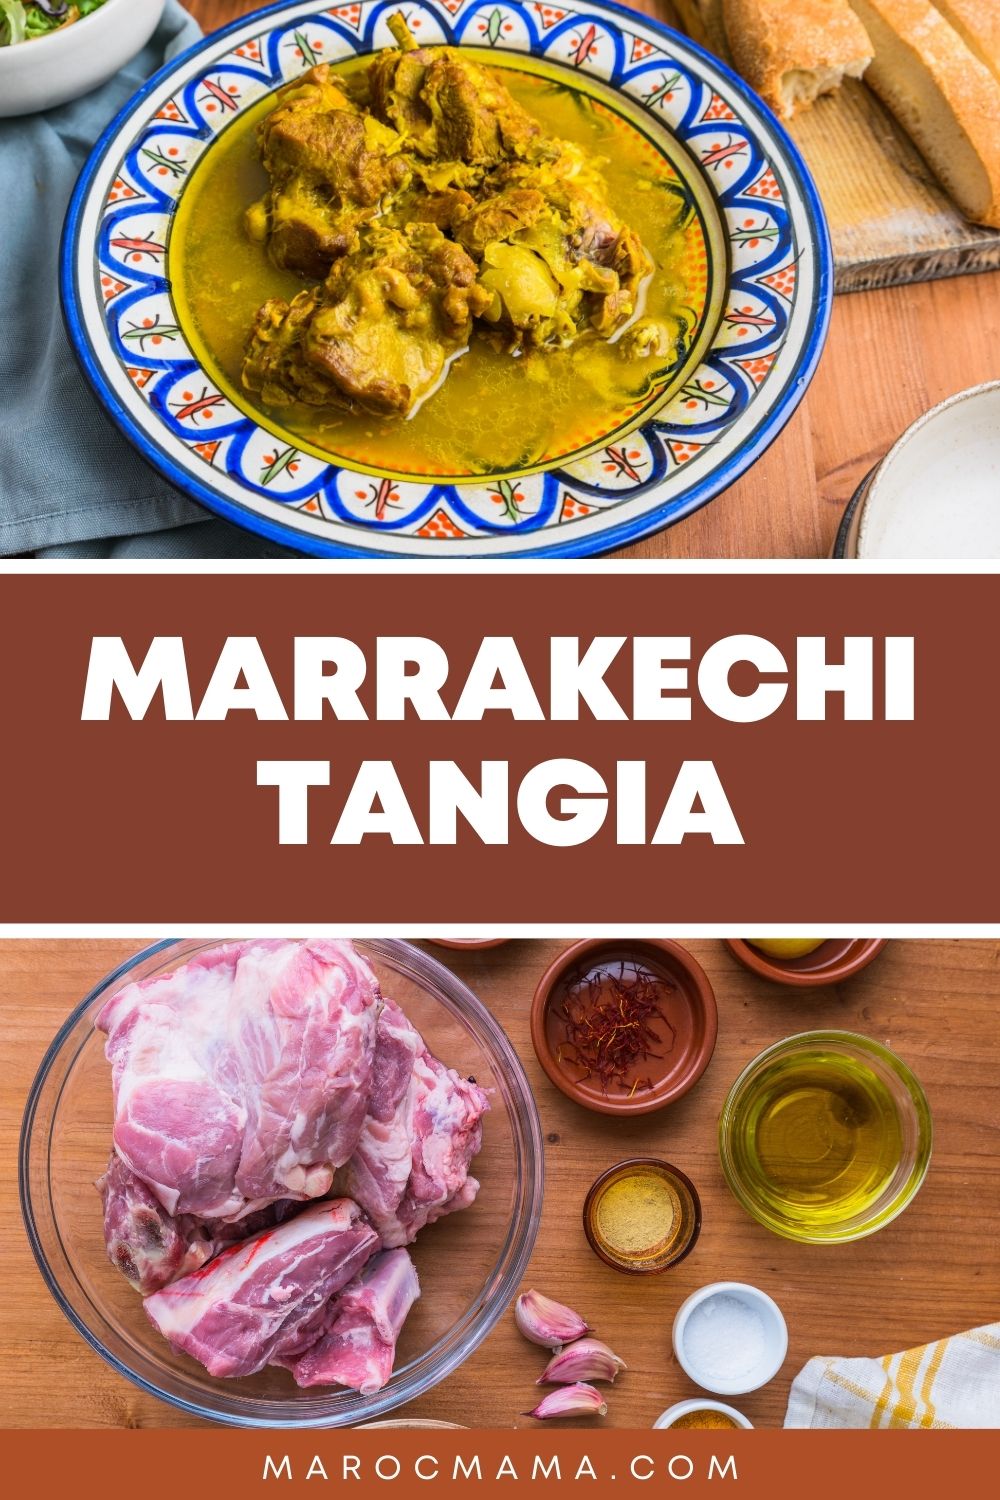 Making Marrakechi Tangia at Home